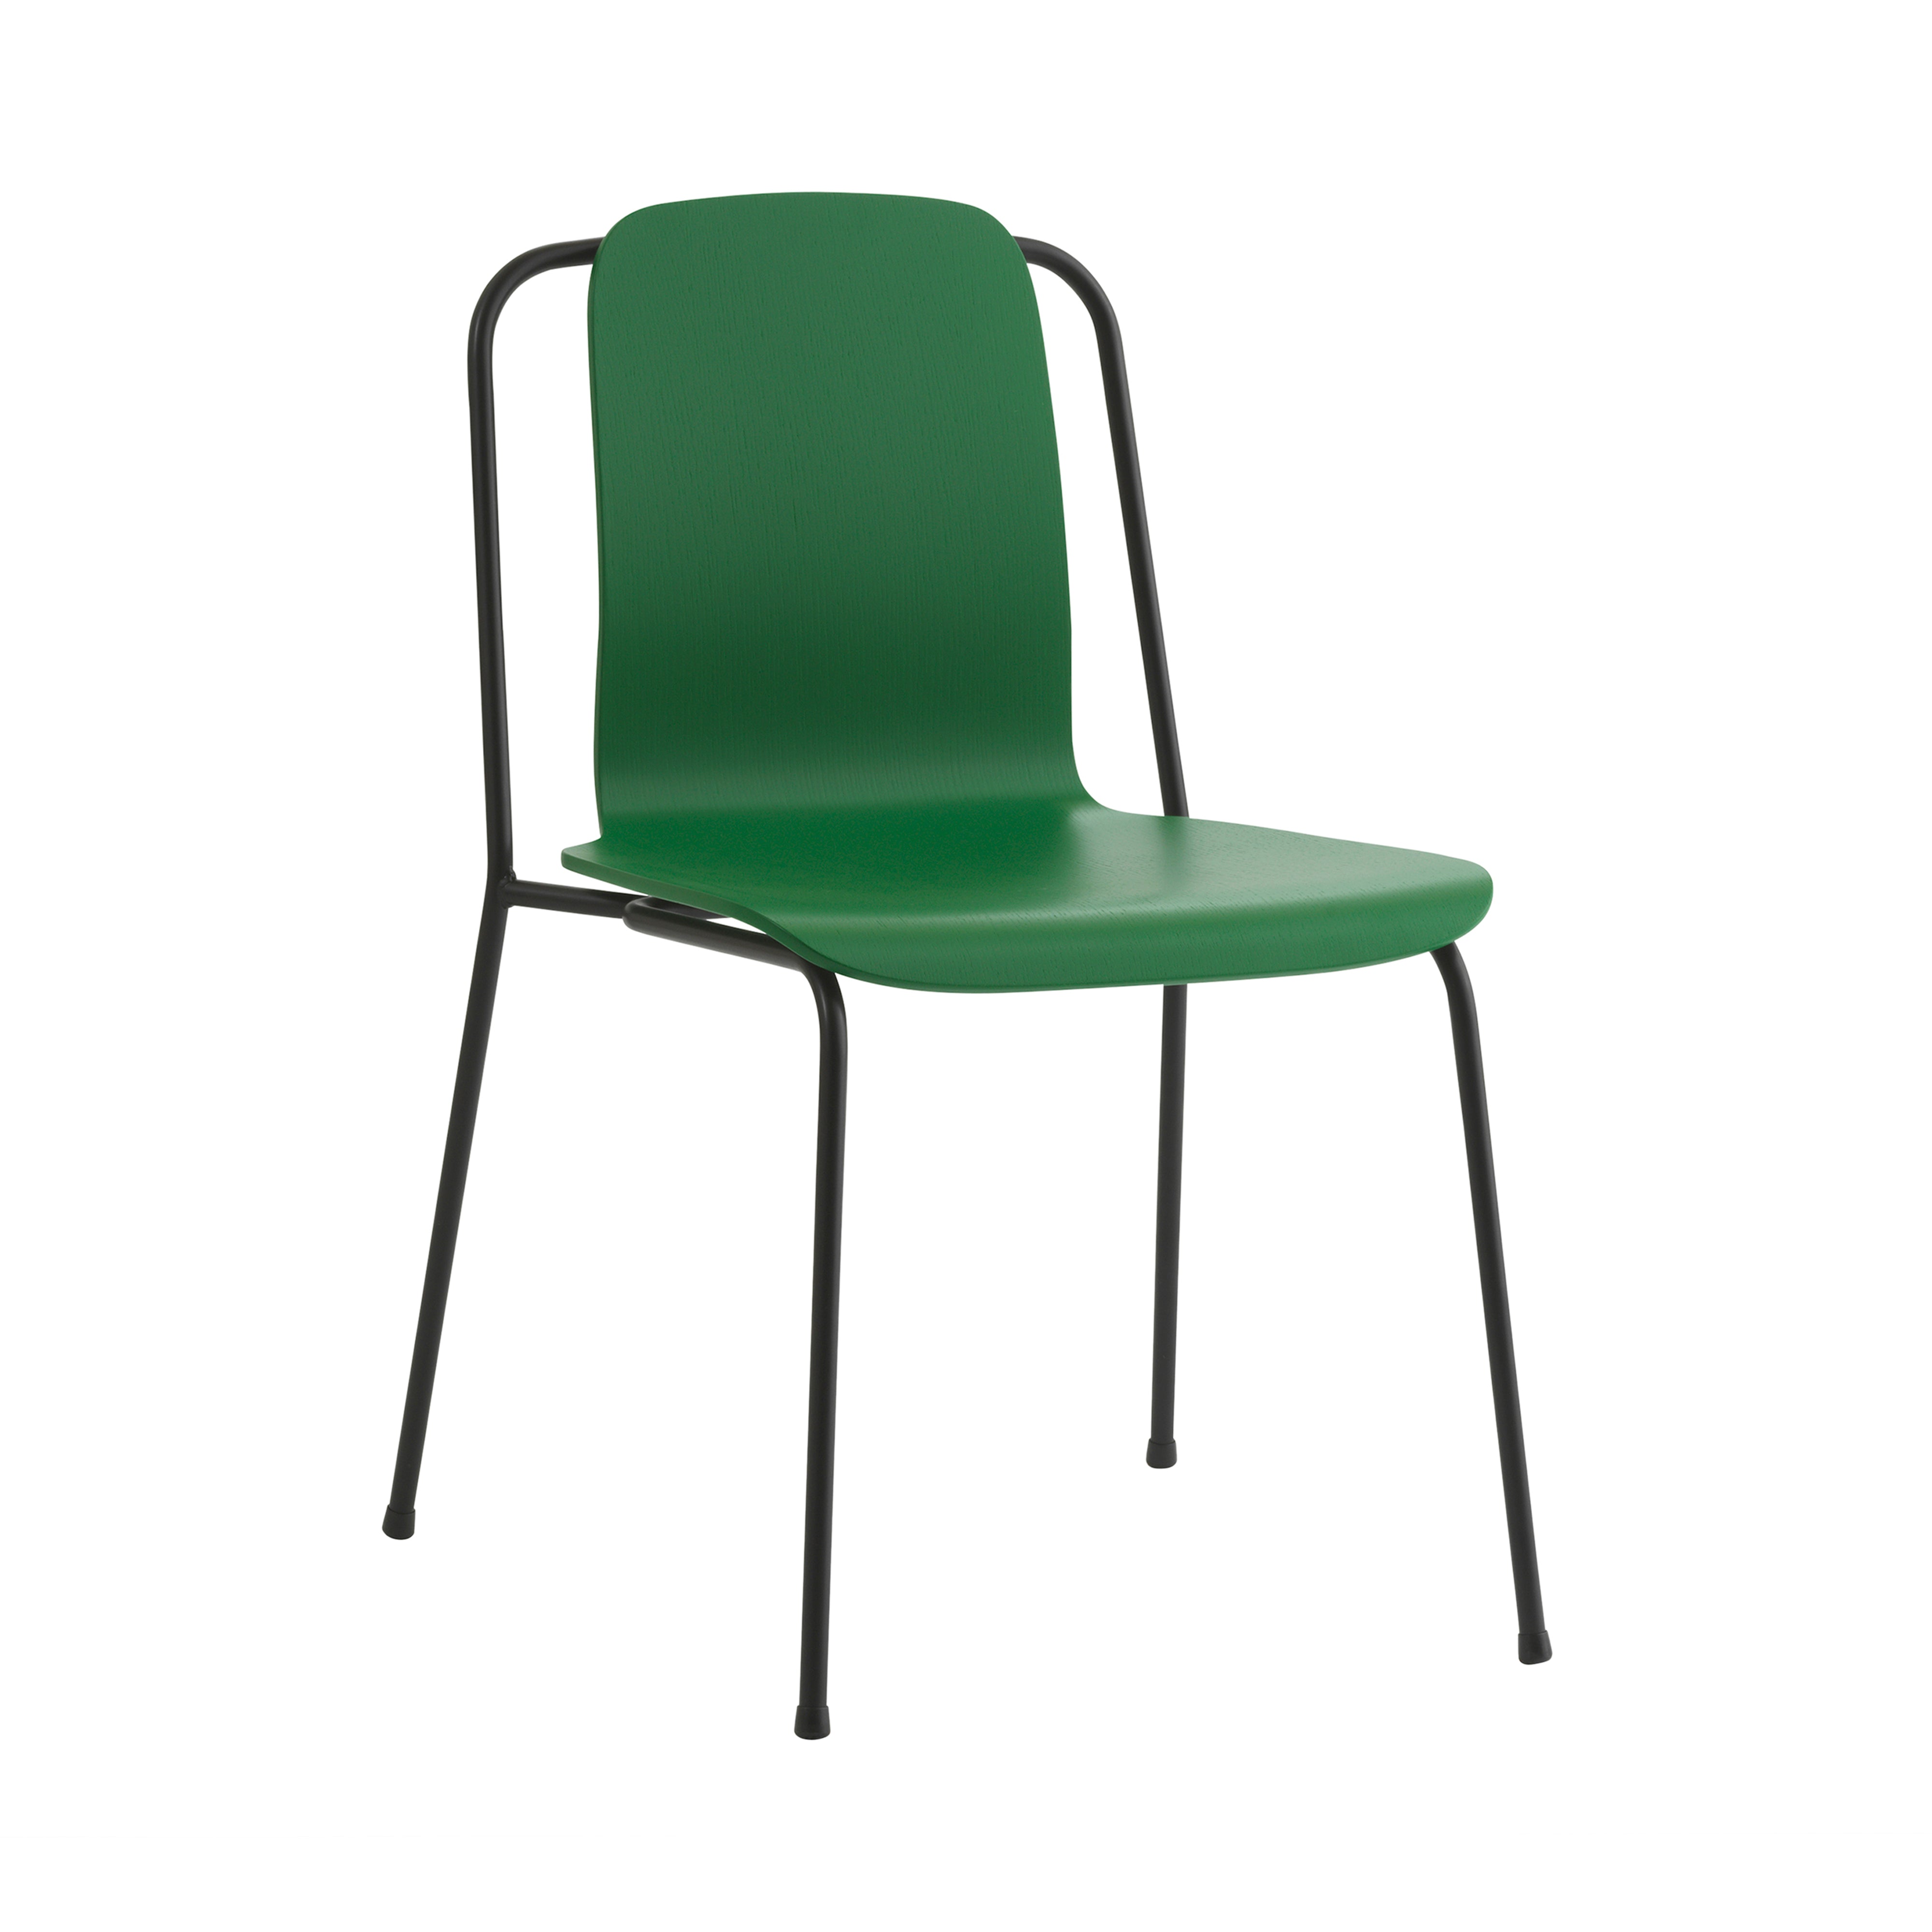 Studio Chair: Green